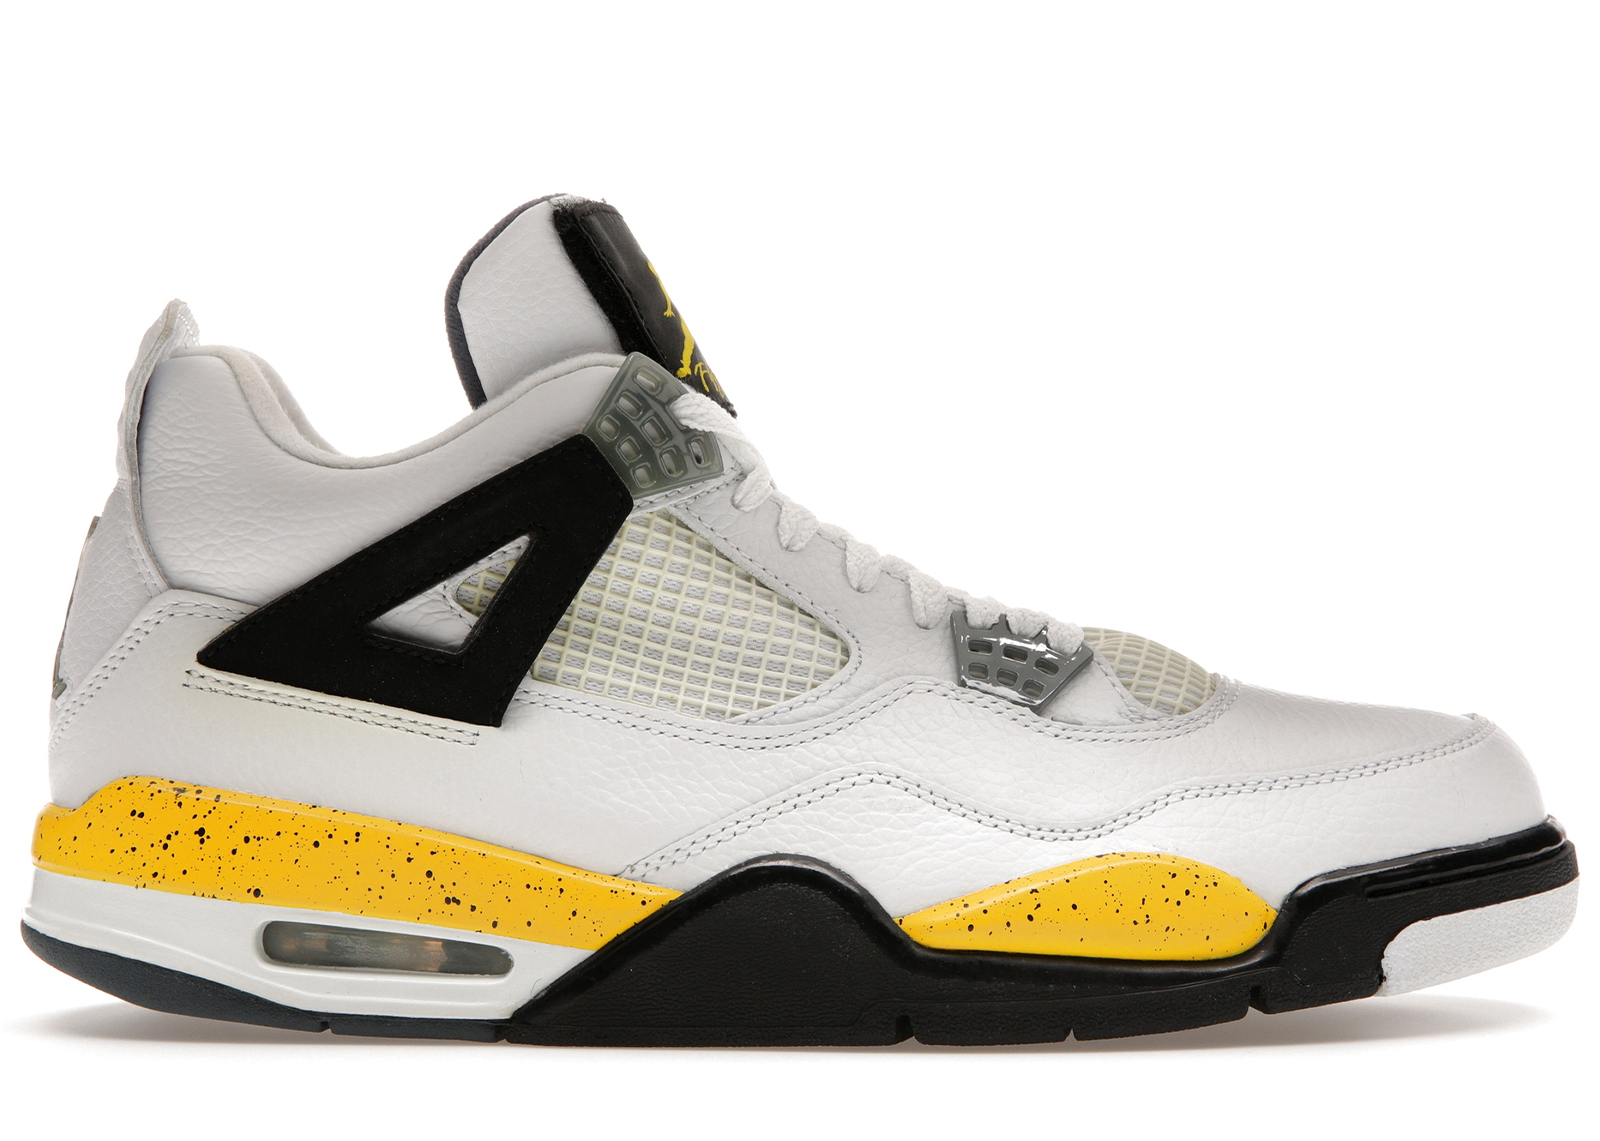 Nike Air Jordan 4 "Tour Yellow"